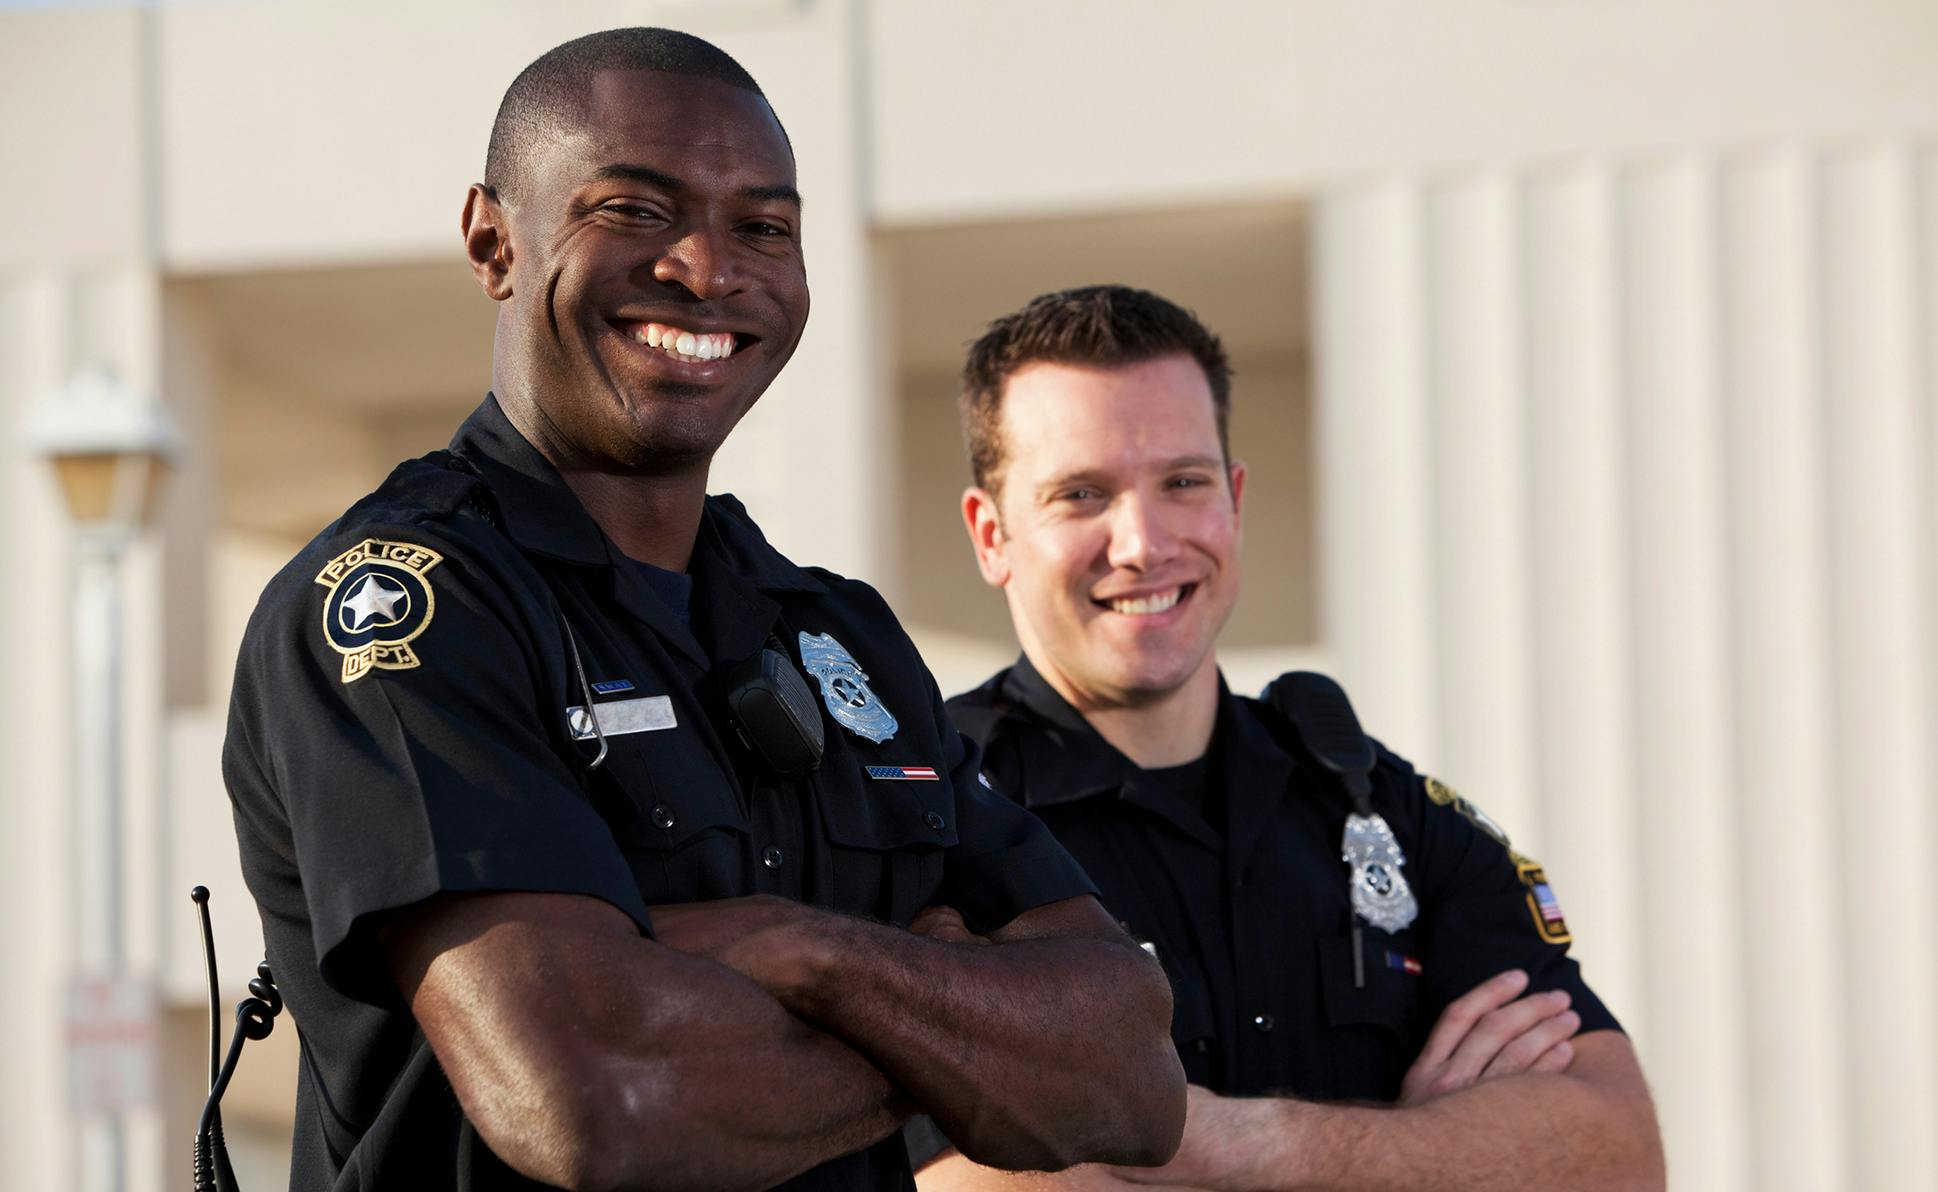 2 police men smiling